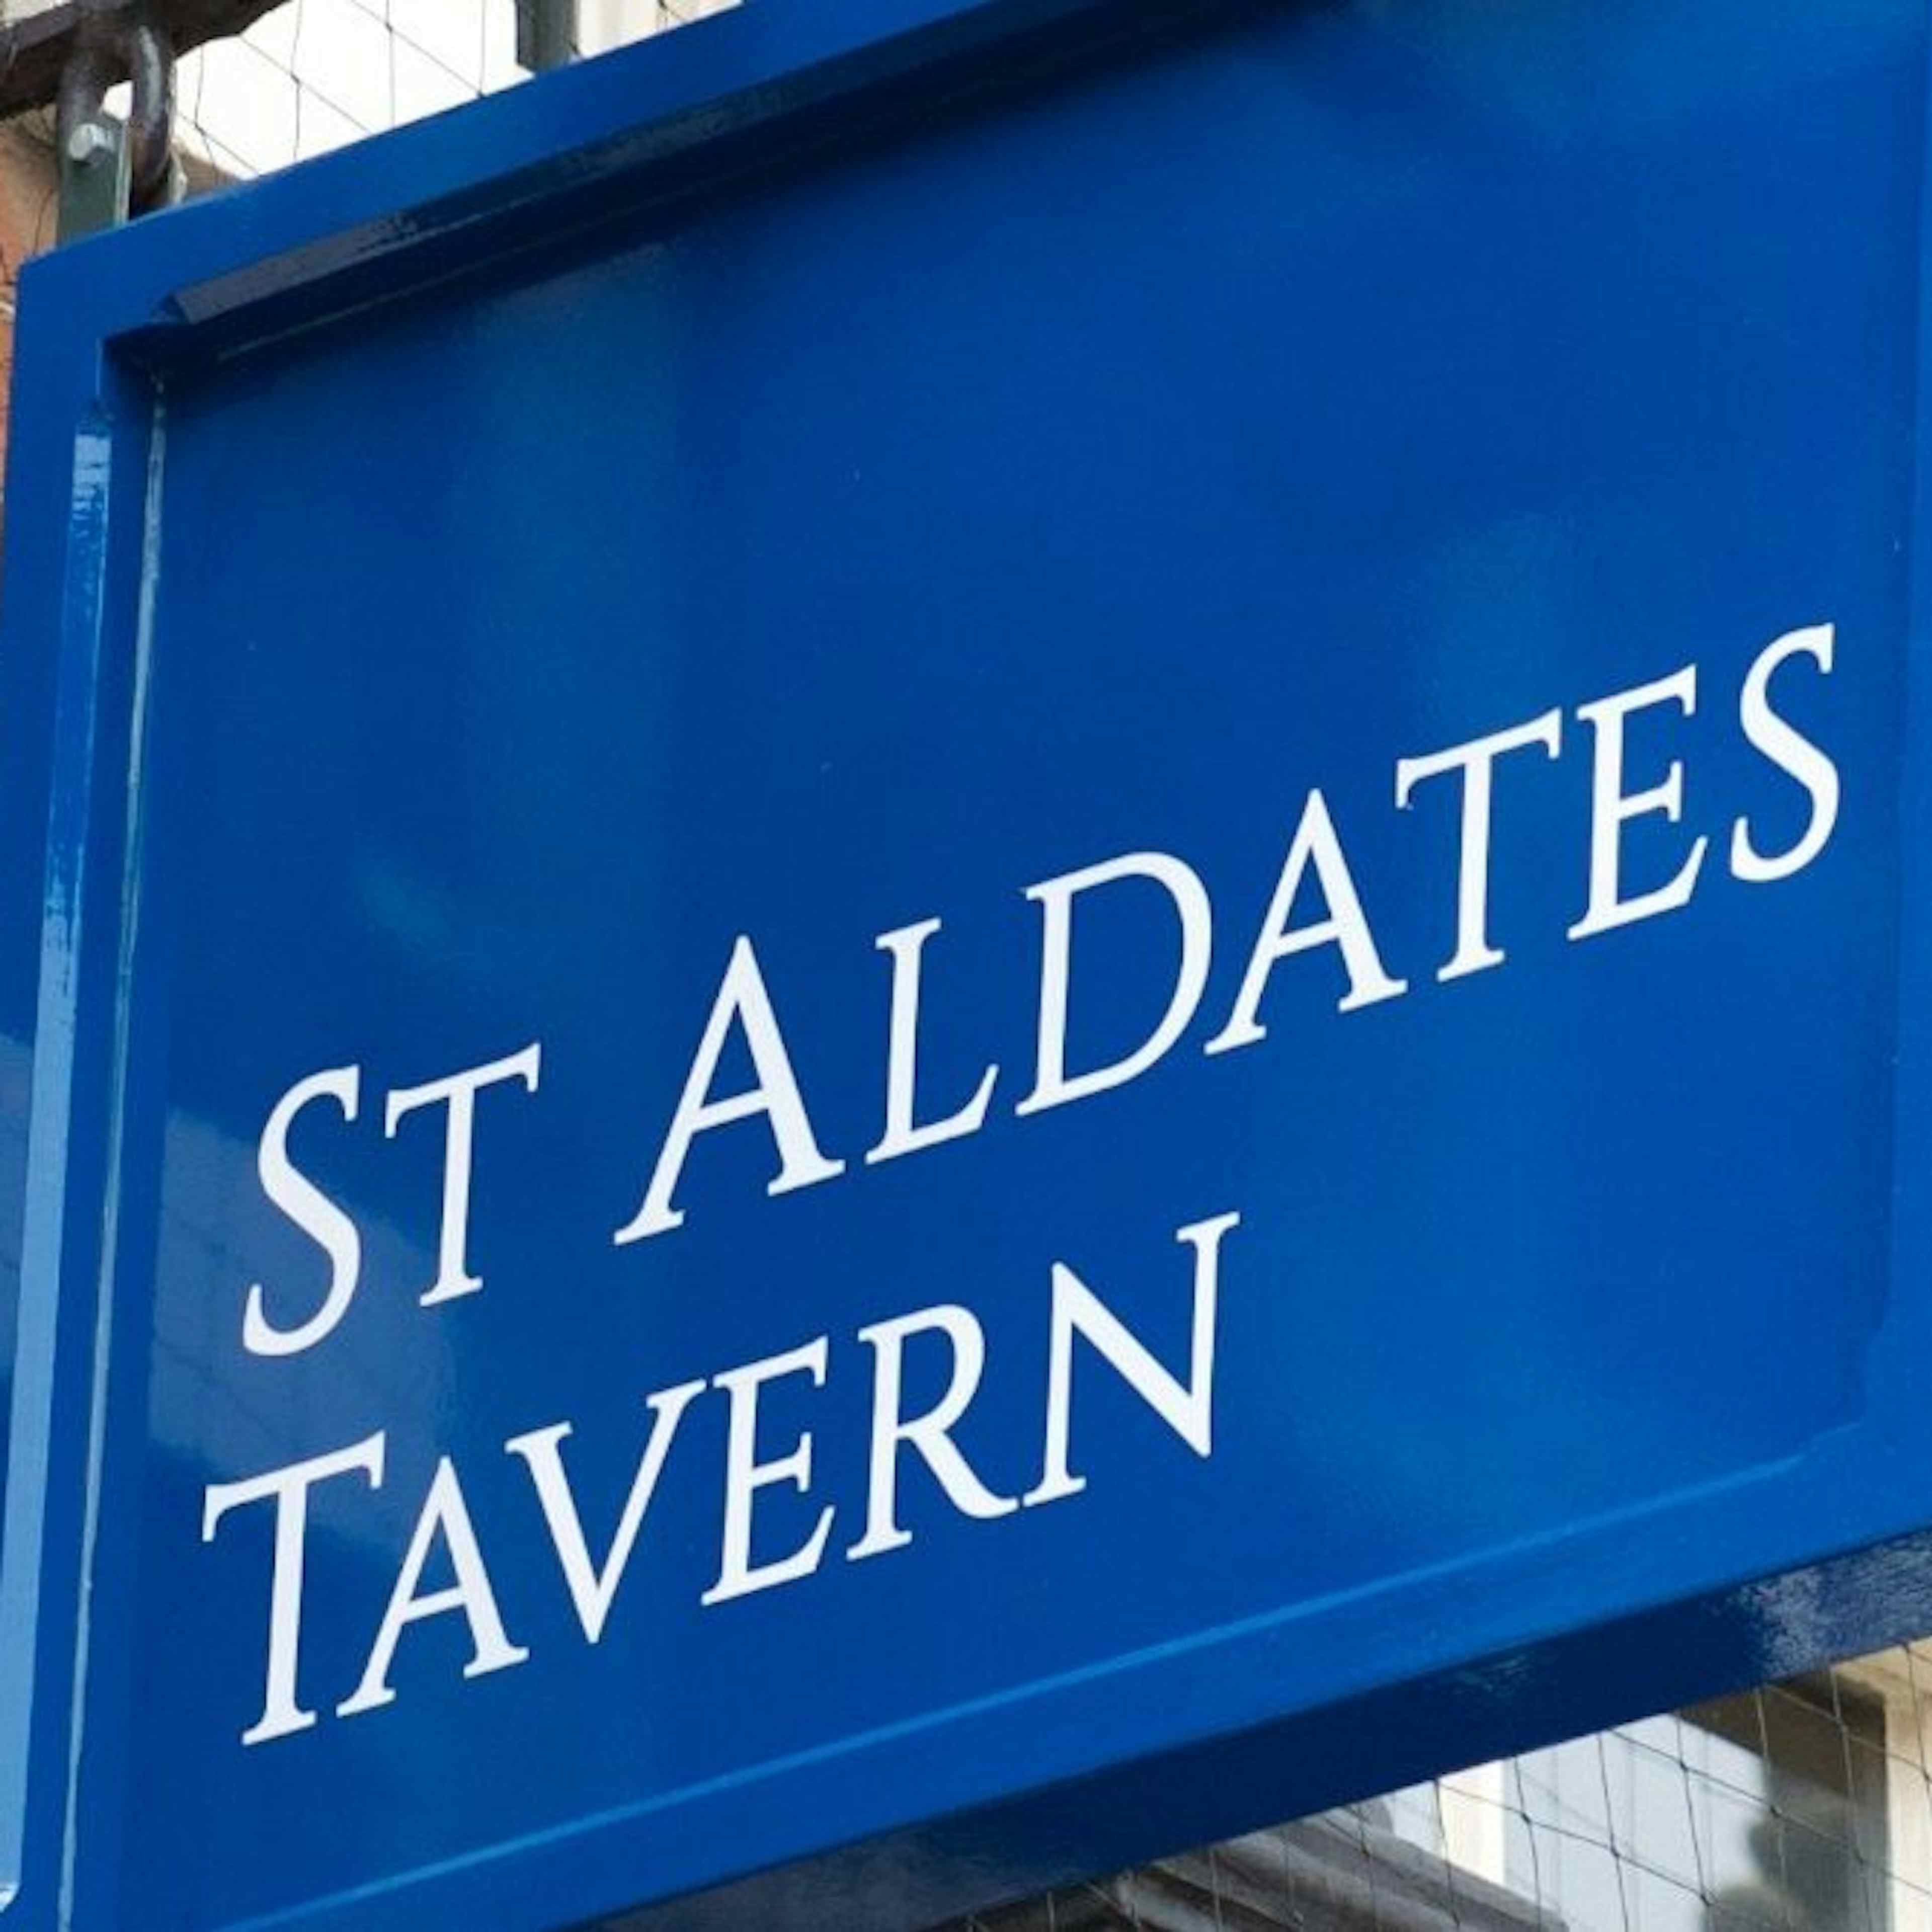 St Aldates Tavern - The Blue Room image 3